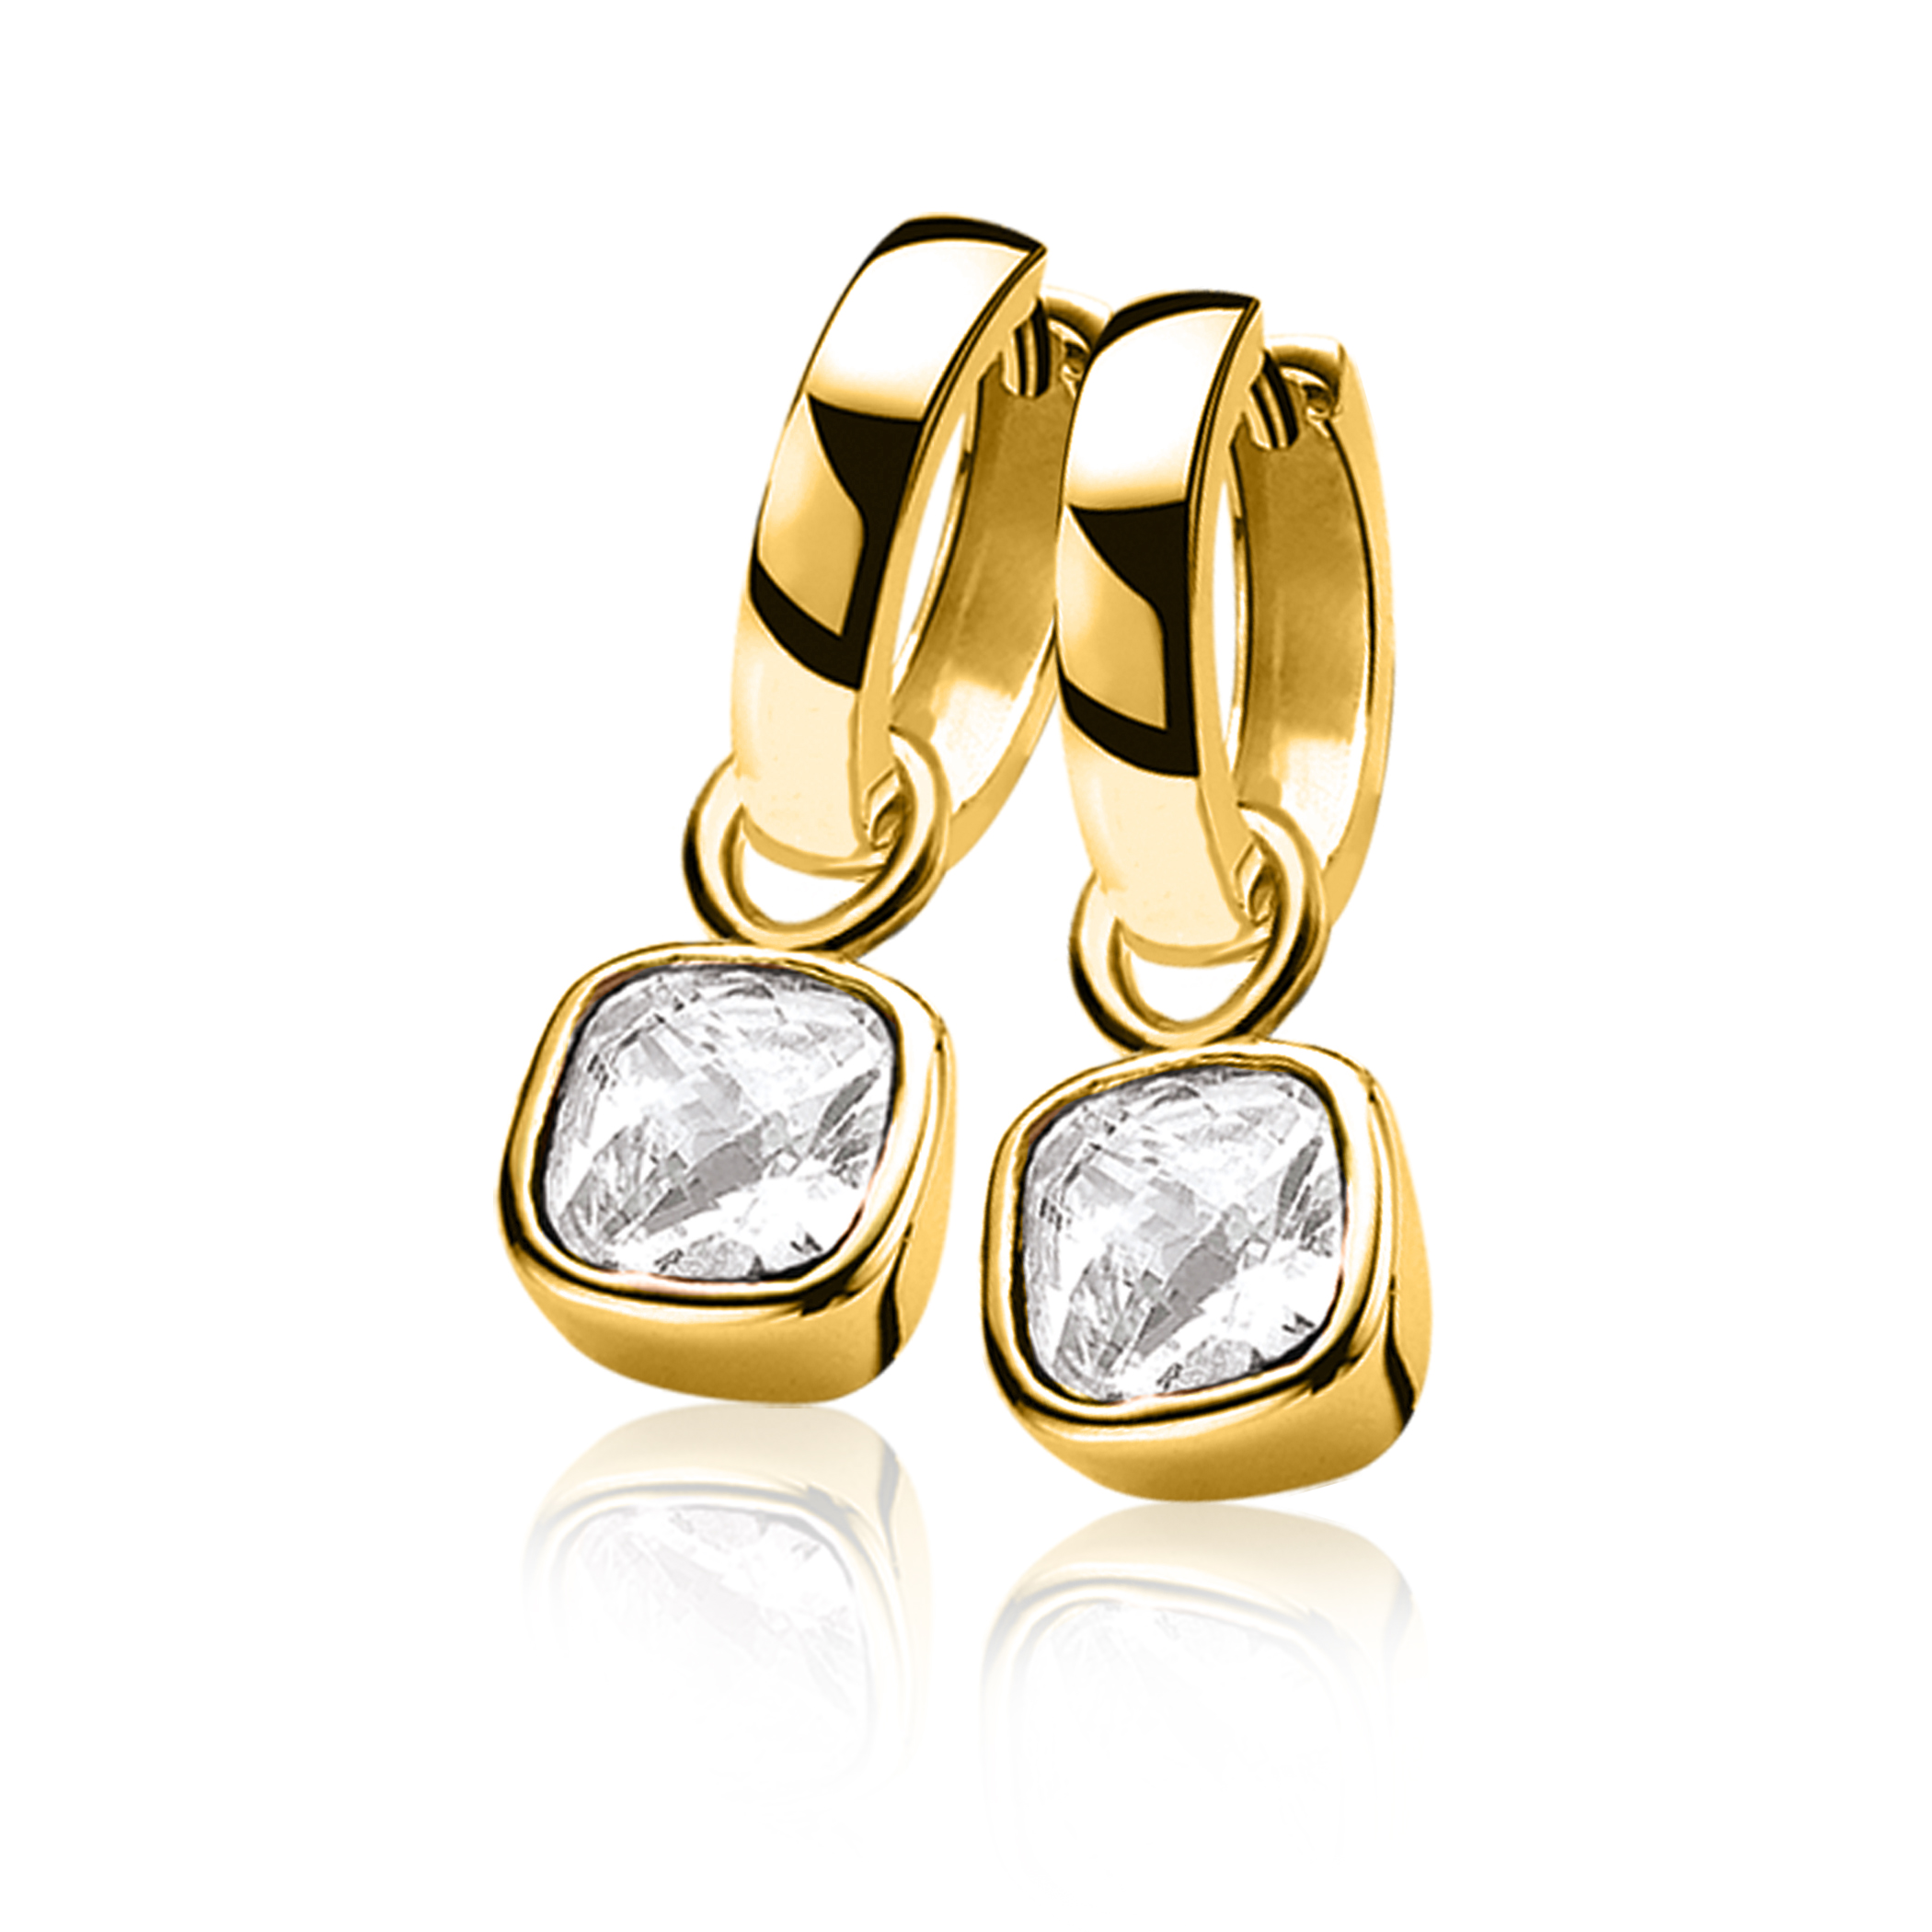 ZINZI Gold Plated Sterling Silver Earrings Pendants White ZICH190Y (excl. hoop earrings)